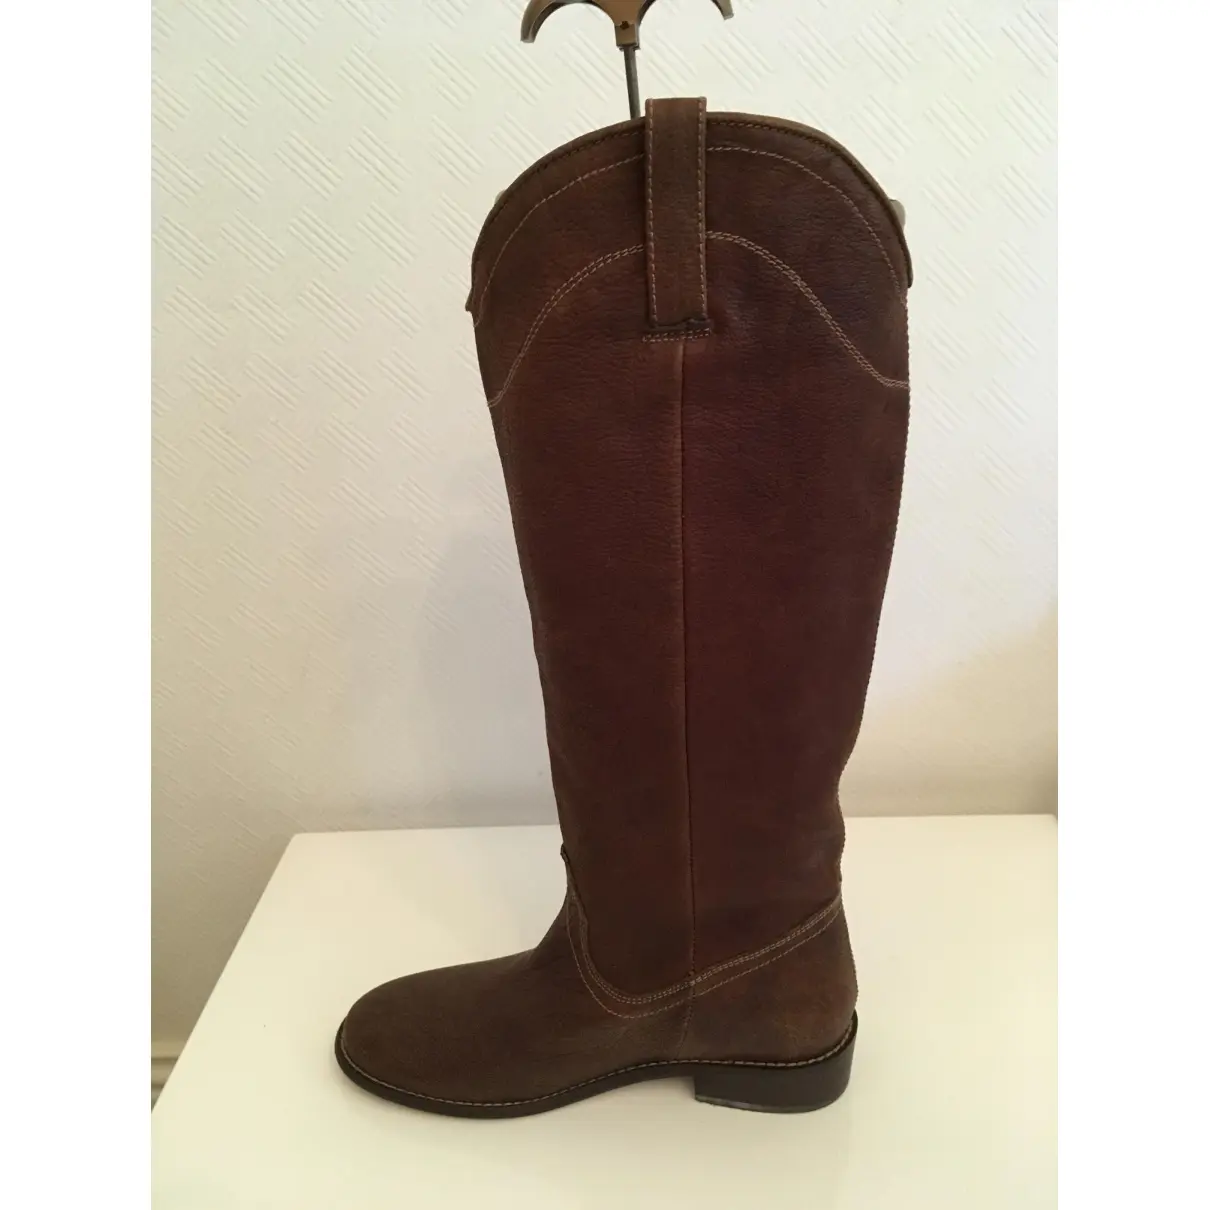 Tatoosh Leather boots for sale